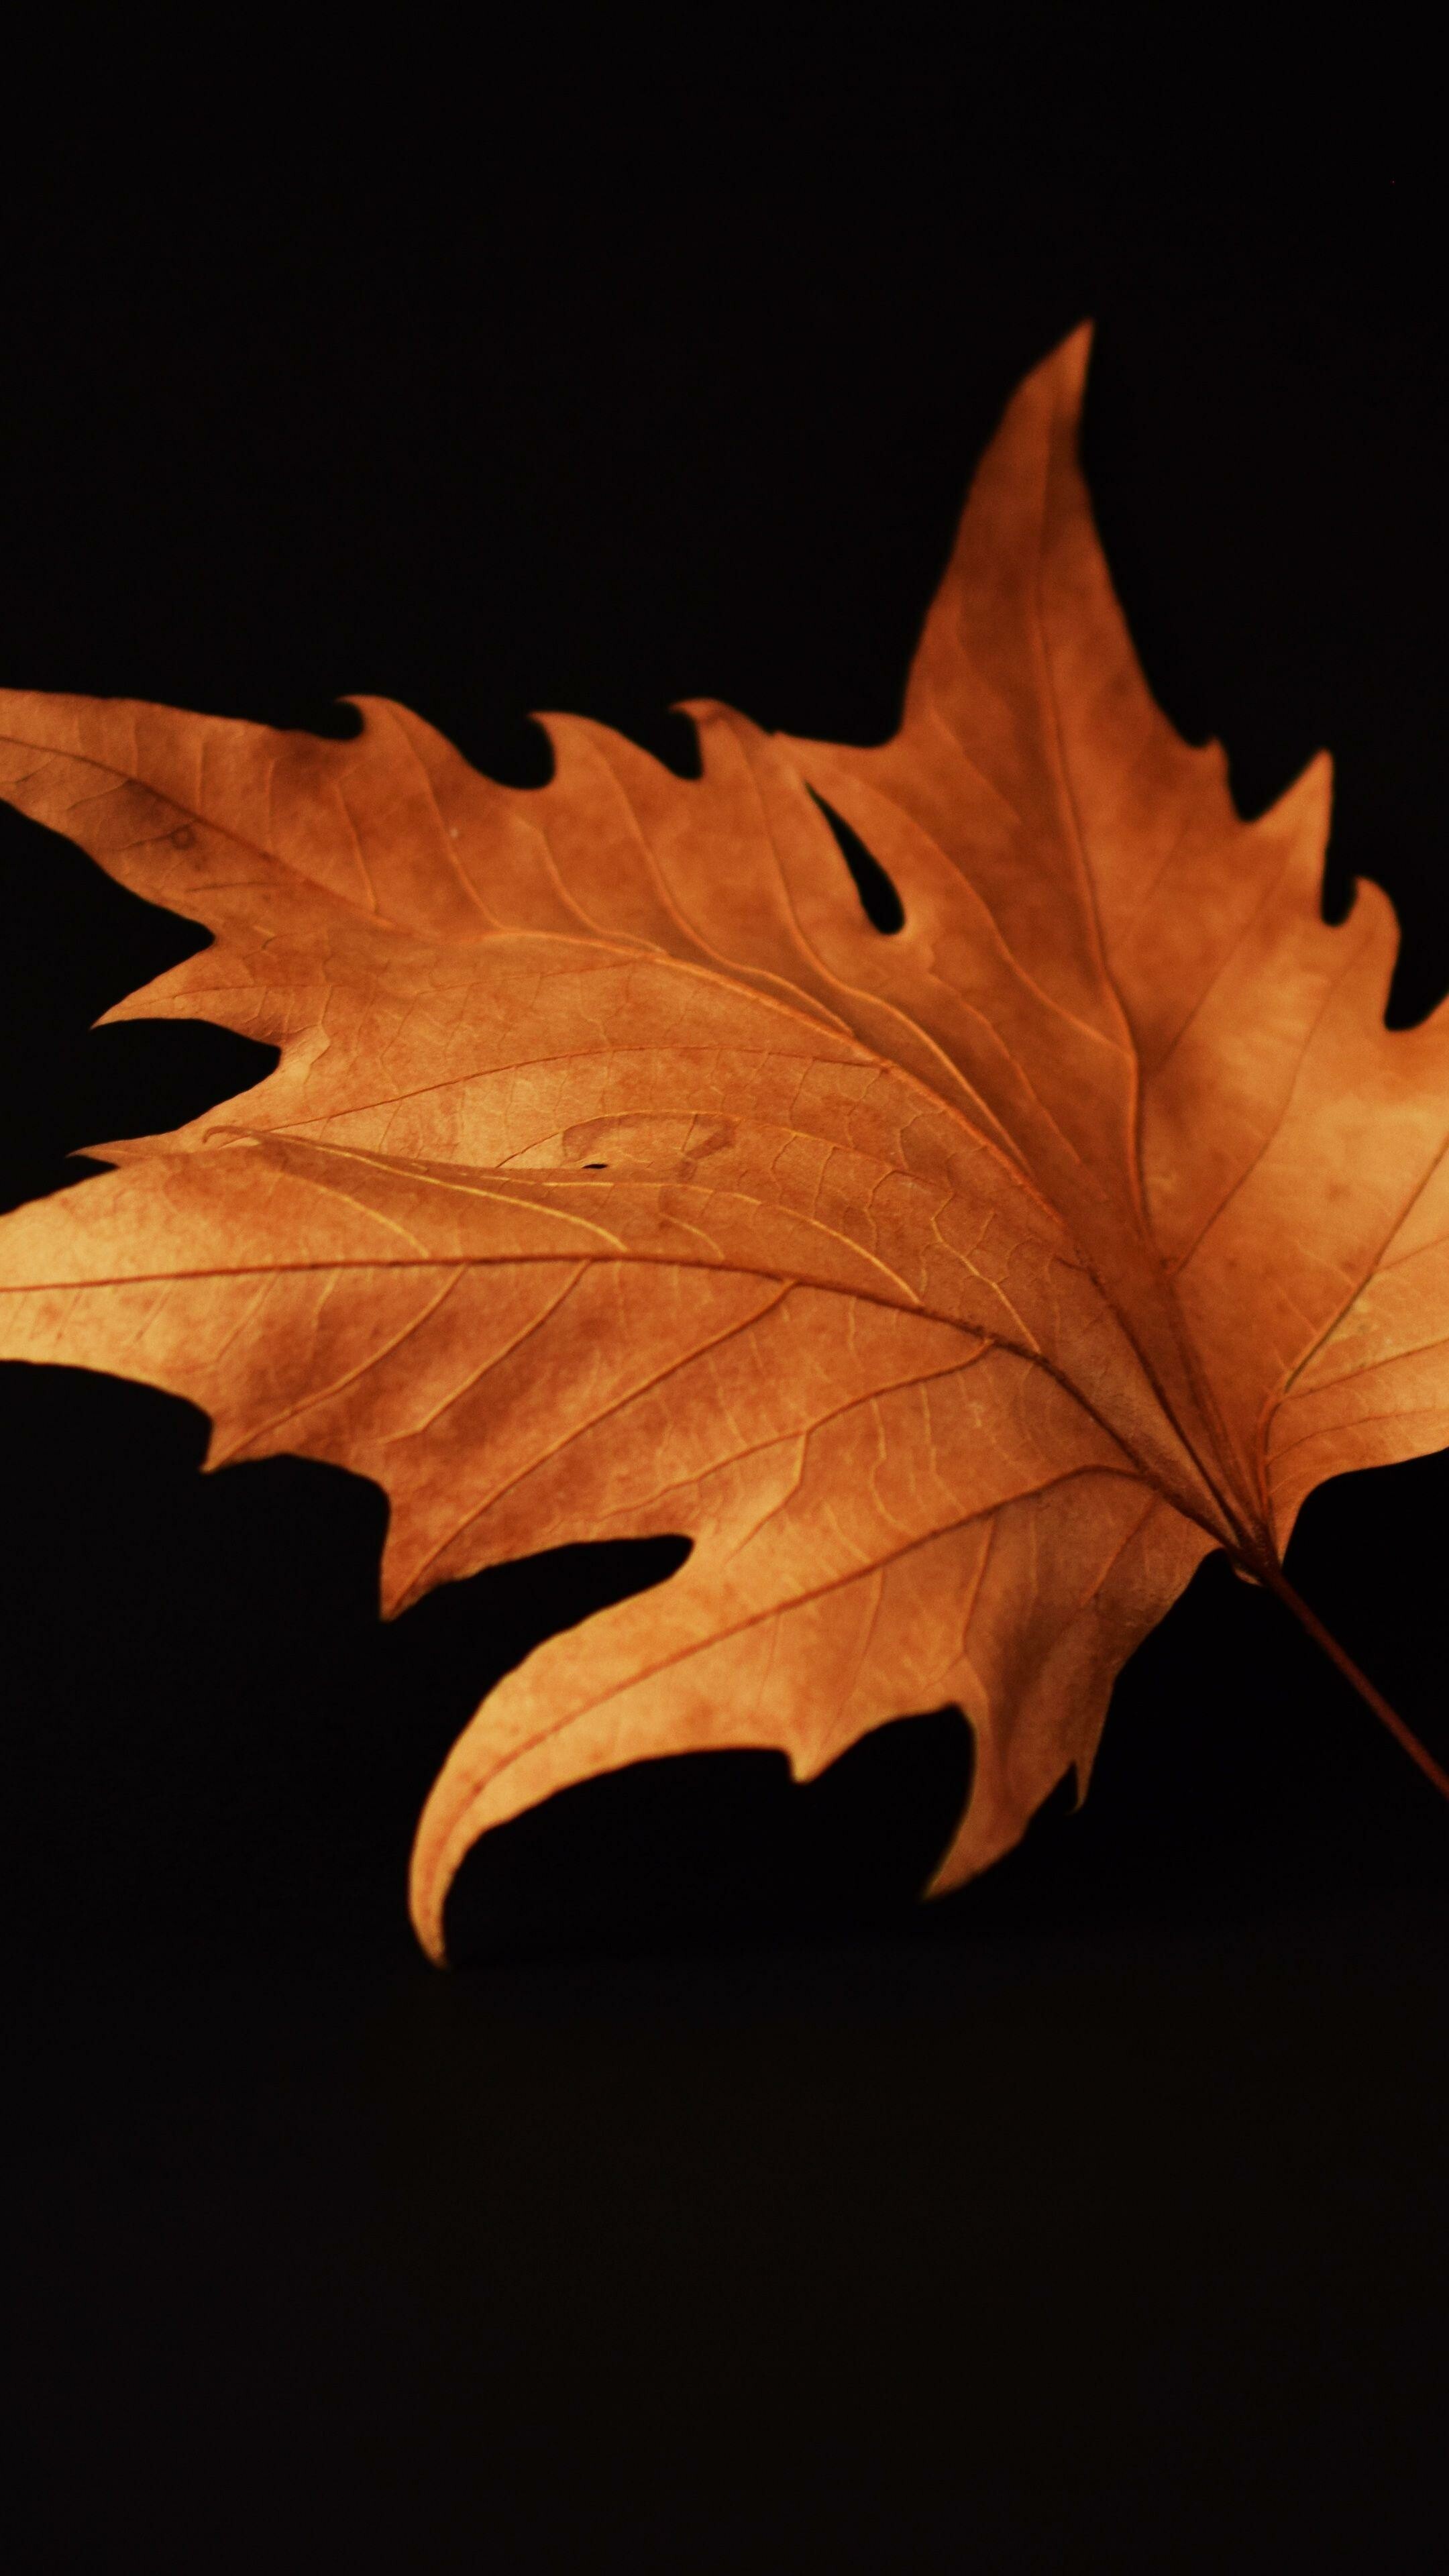 Leaves: Brown autumn leaf, A catabolic process of foliage senescence. 2160x3840 4K Wallpaper.